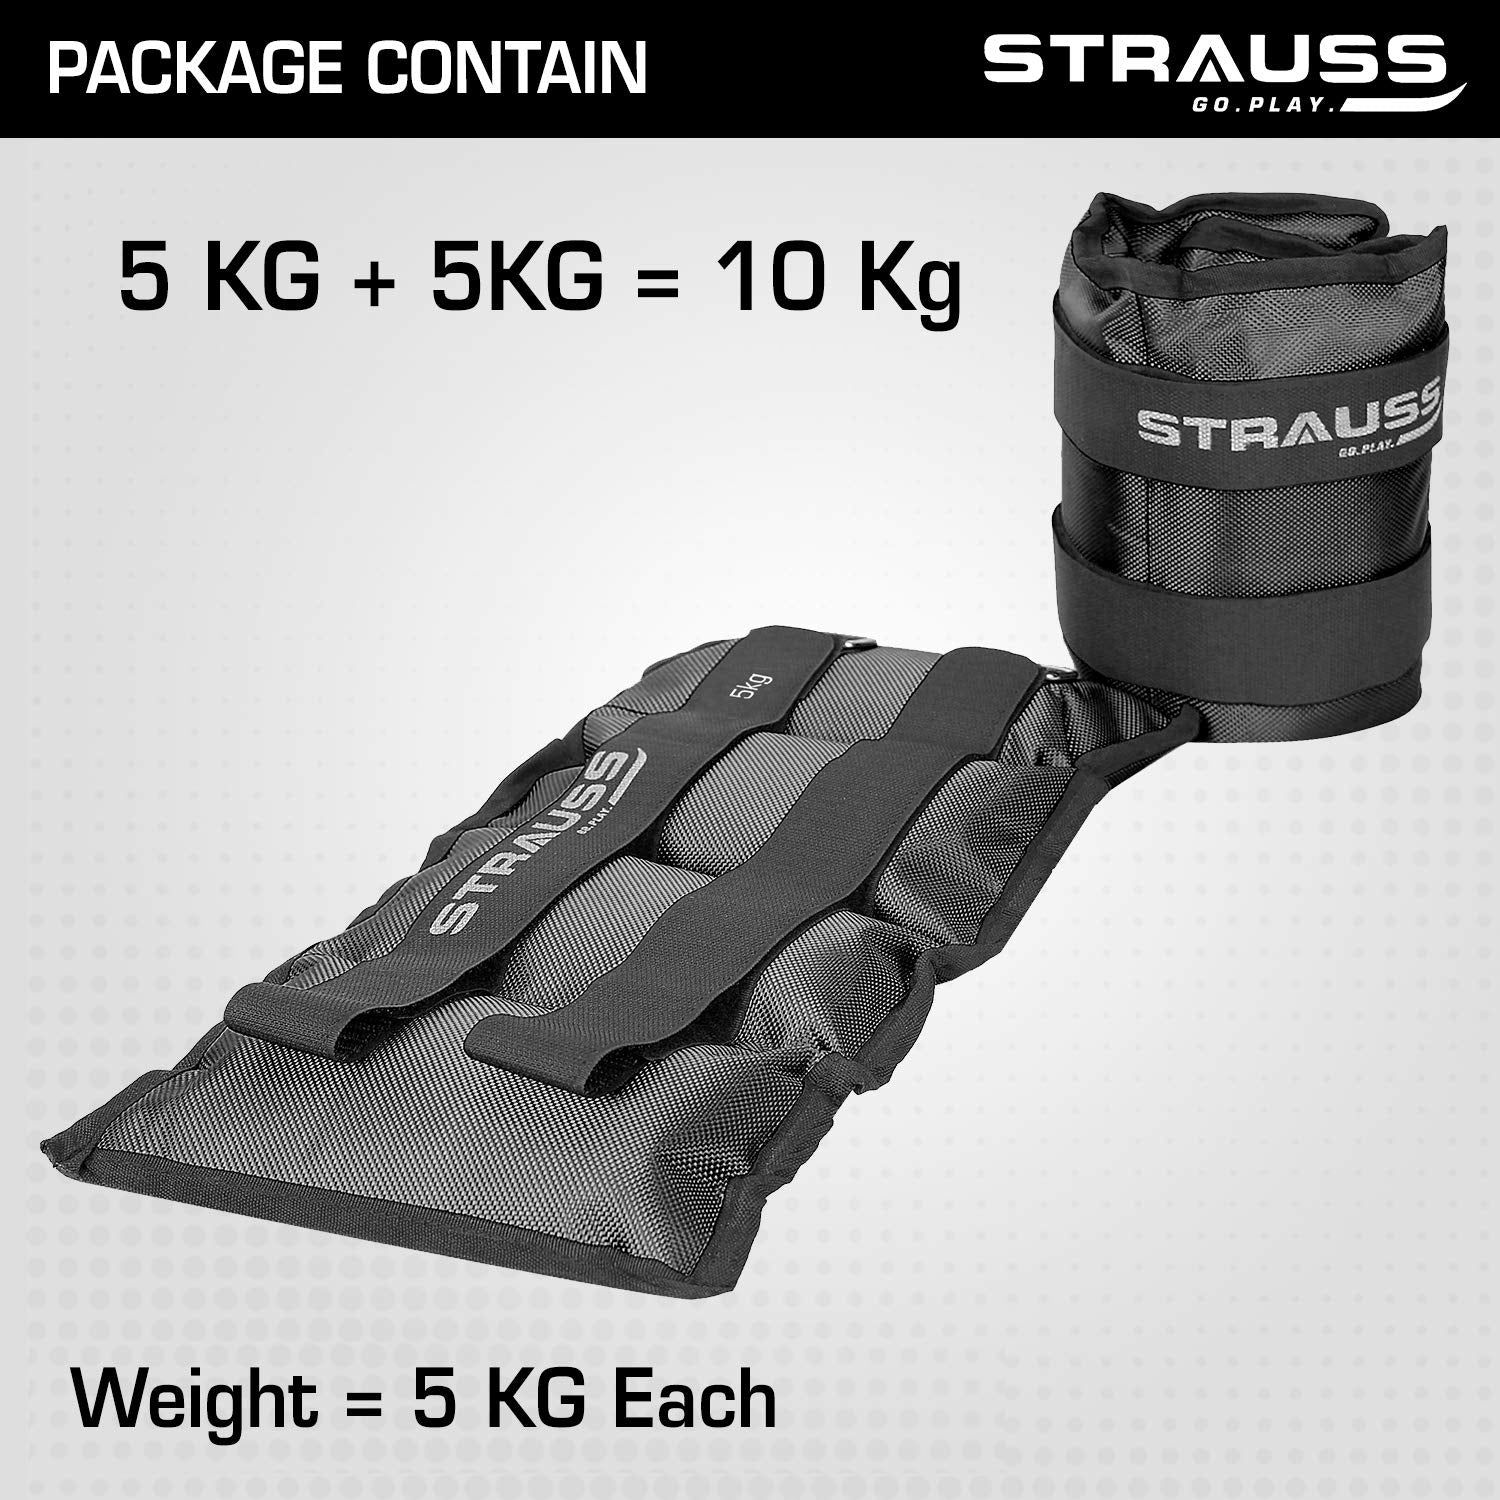 Strauss Ankle Weight, 5 Kg (Each), Pair, (Black)